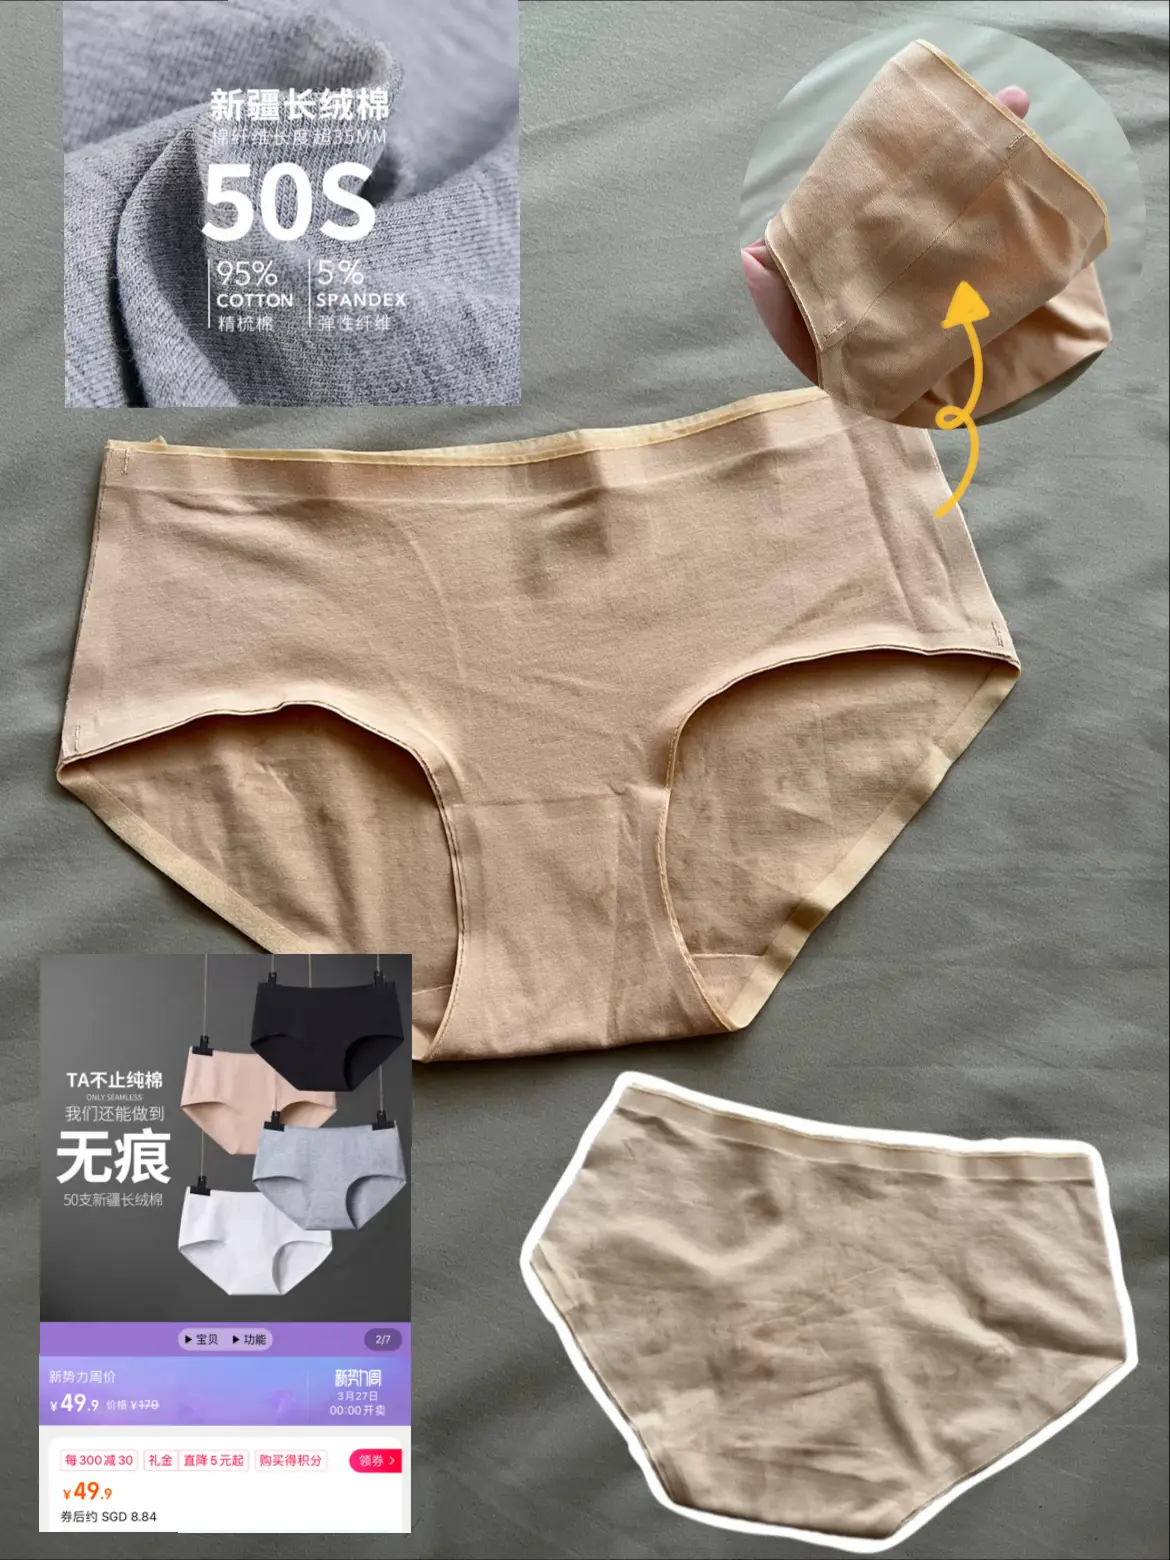 Seamless Underwear for sale in Sydney, Australia